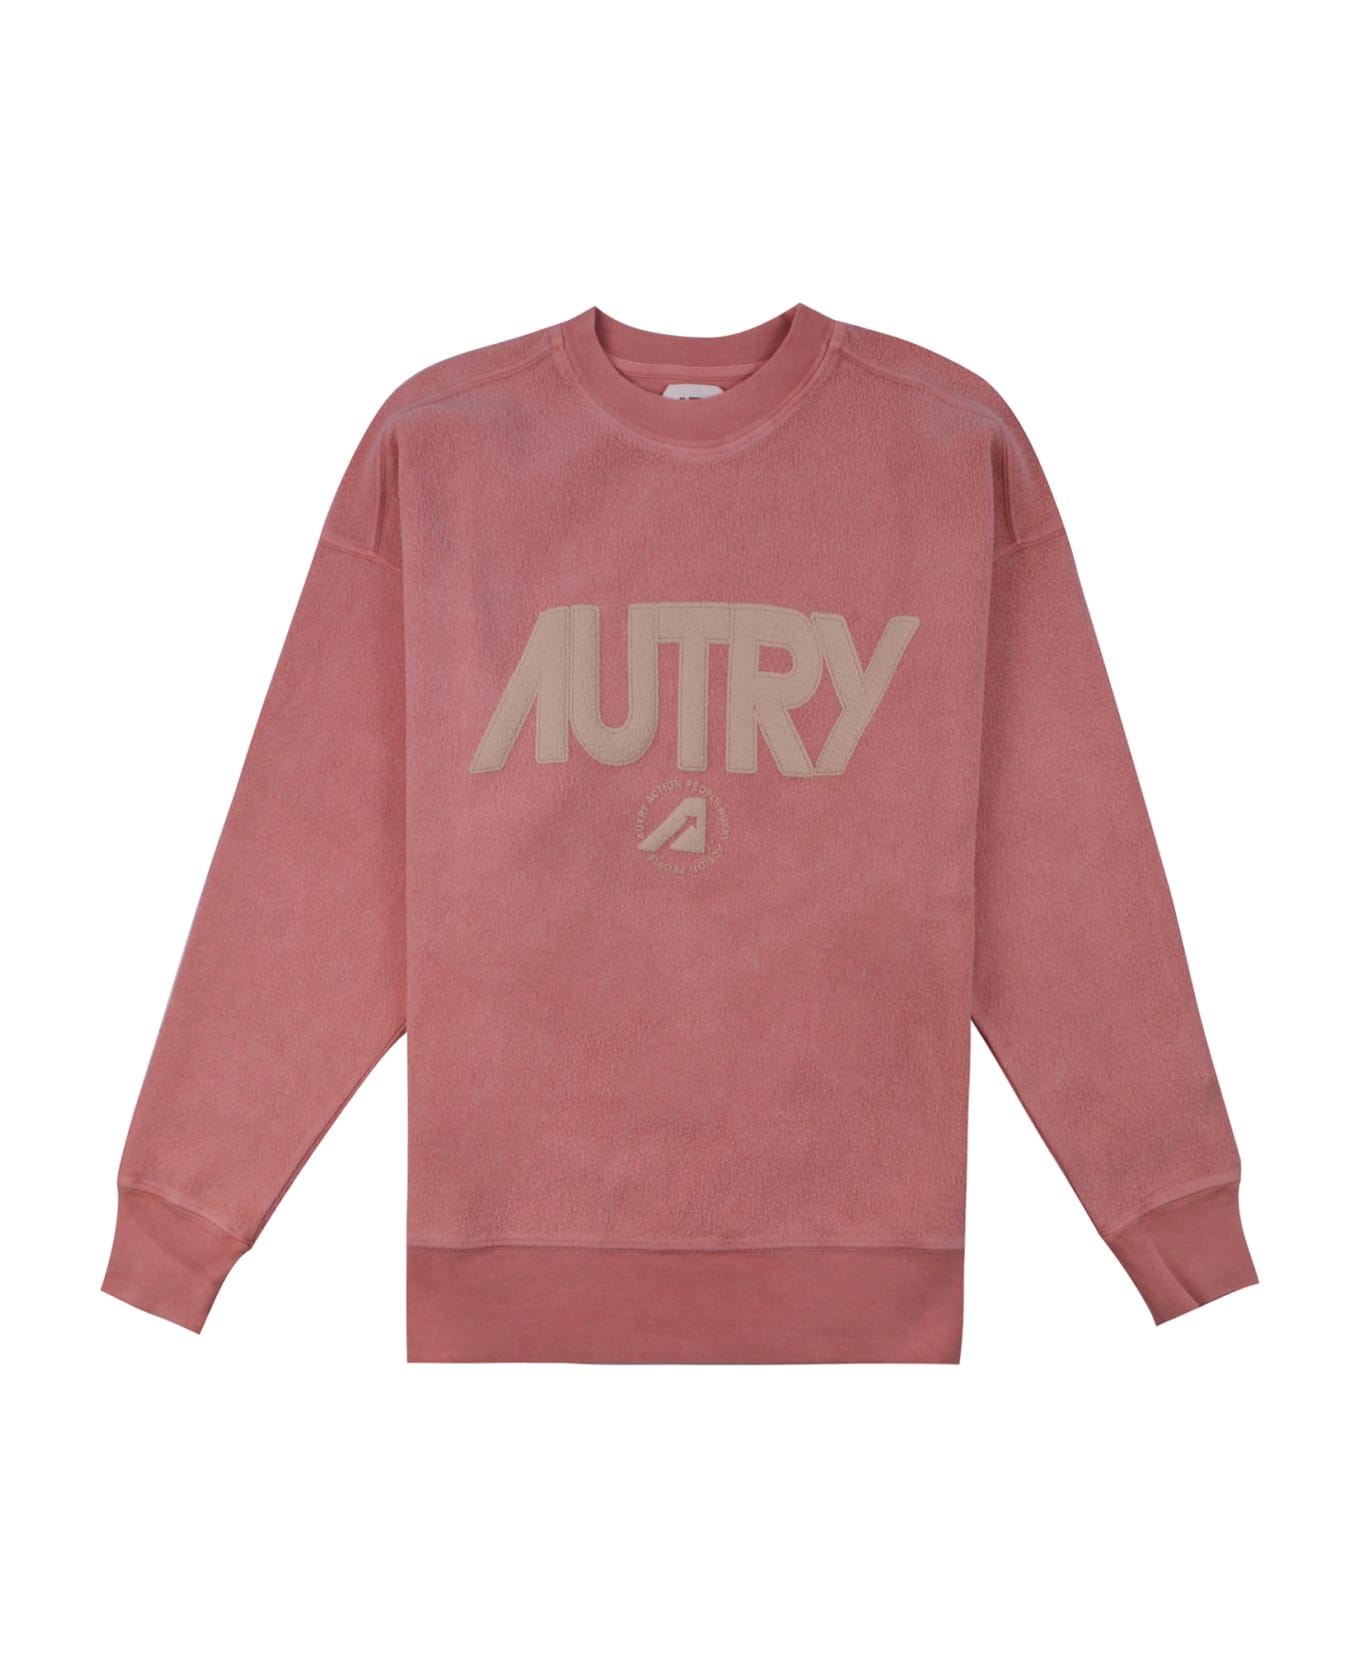 Autry Amour Sweatshirt - Rose